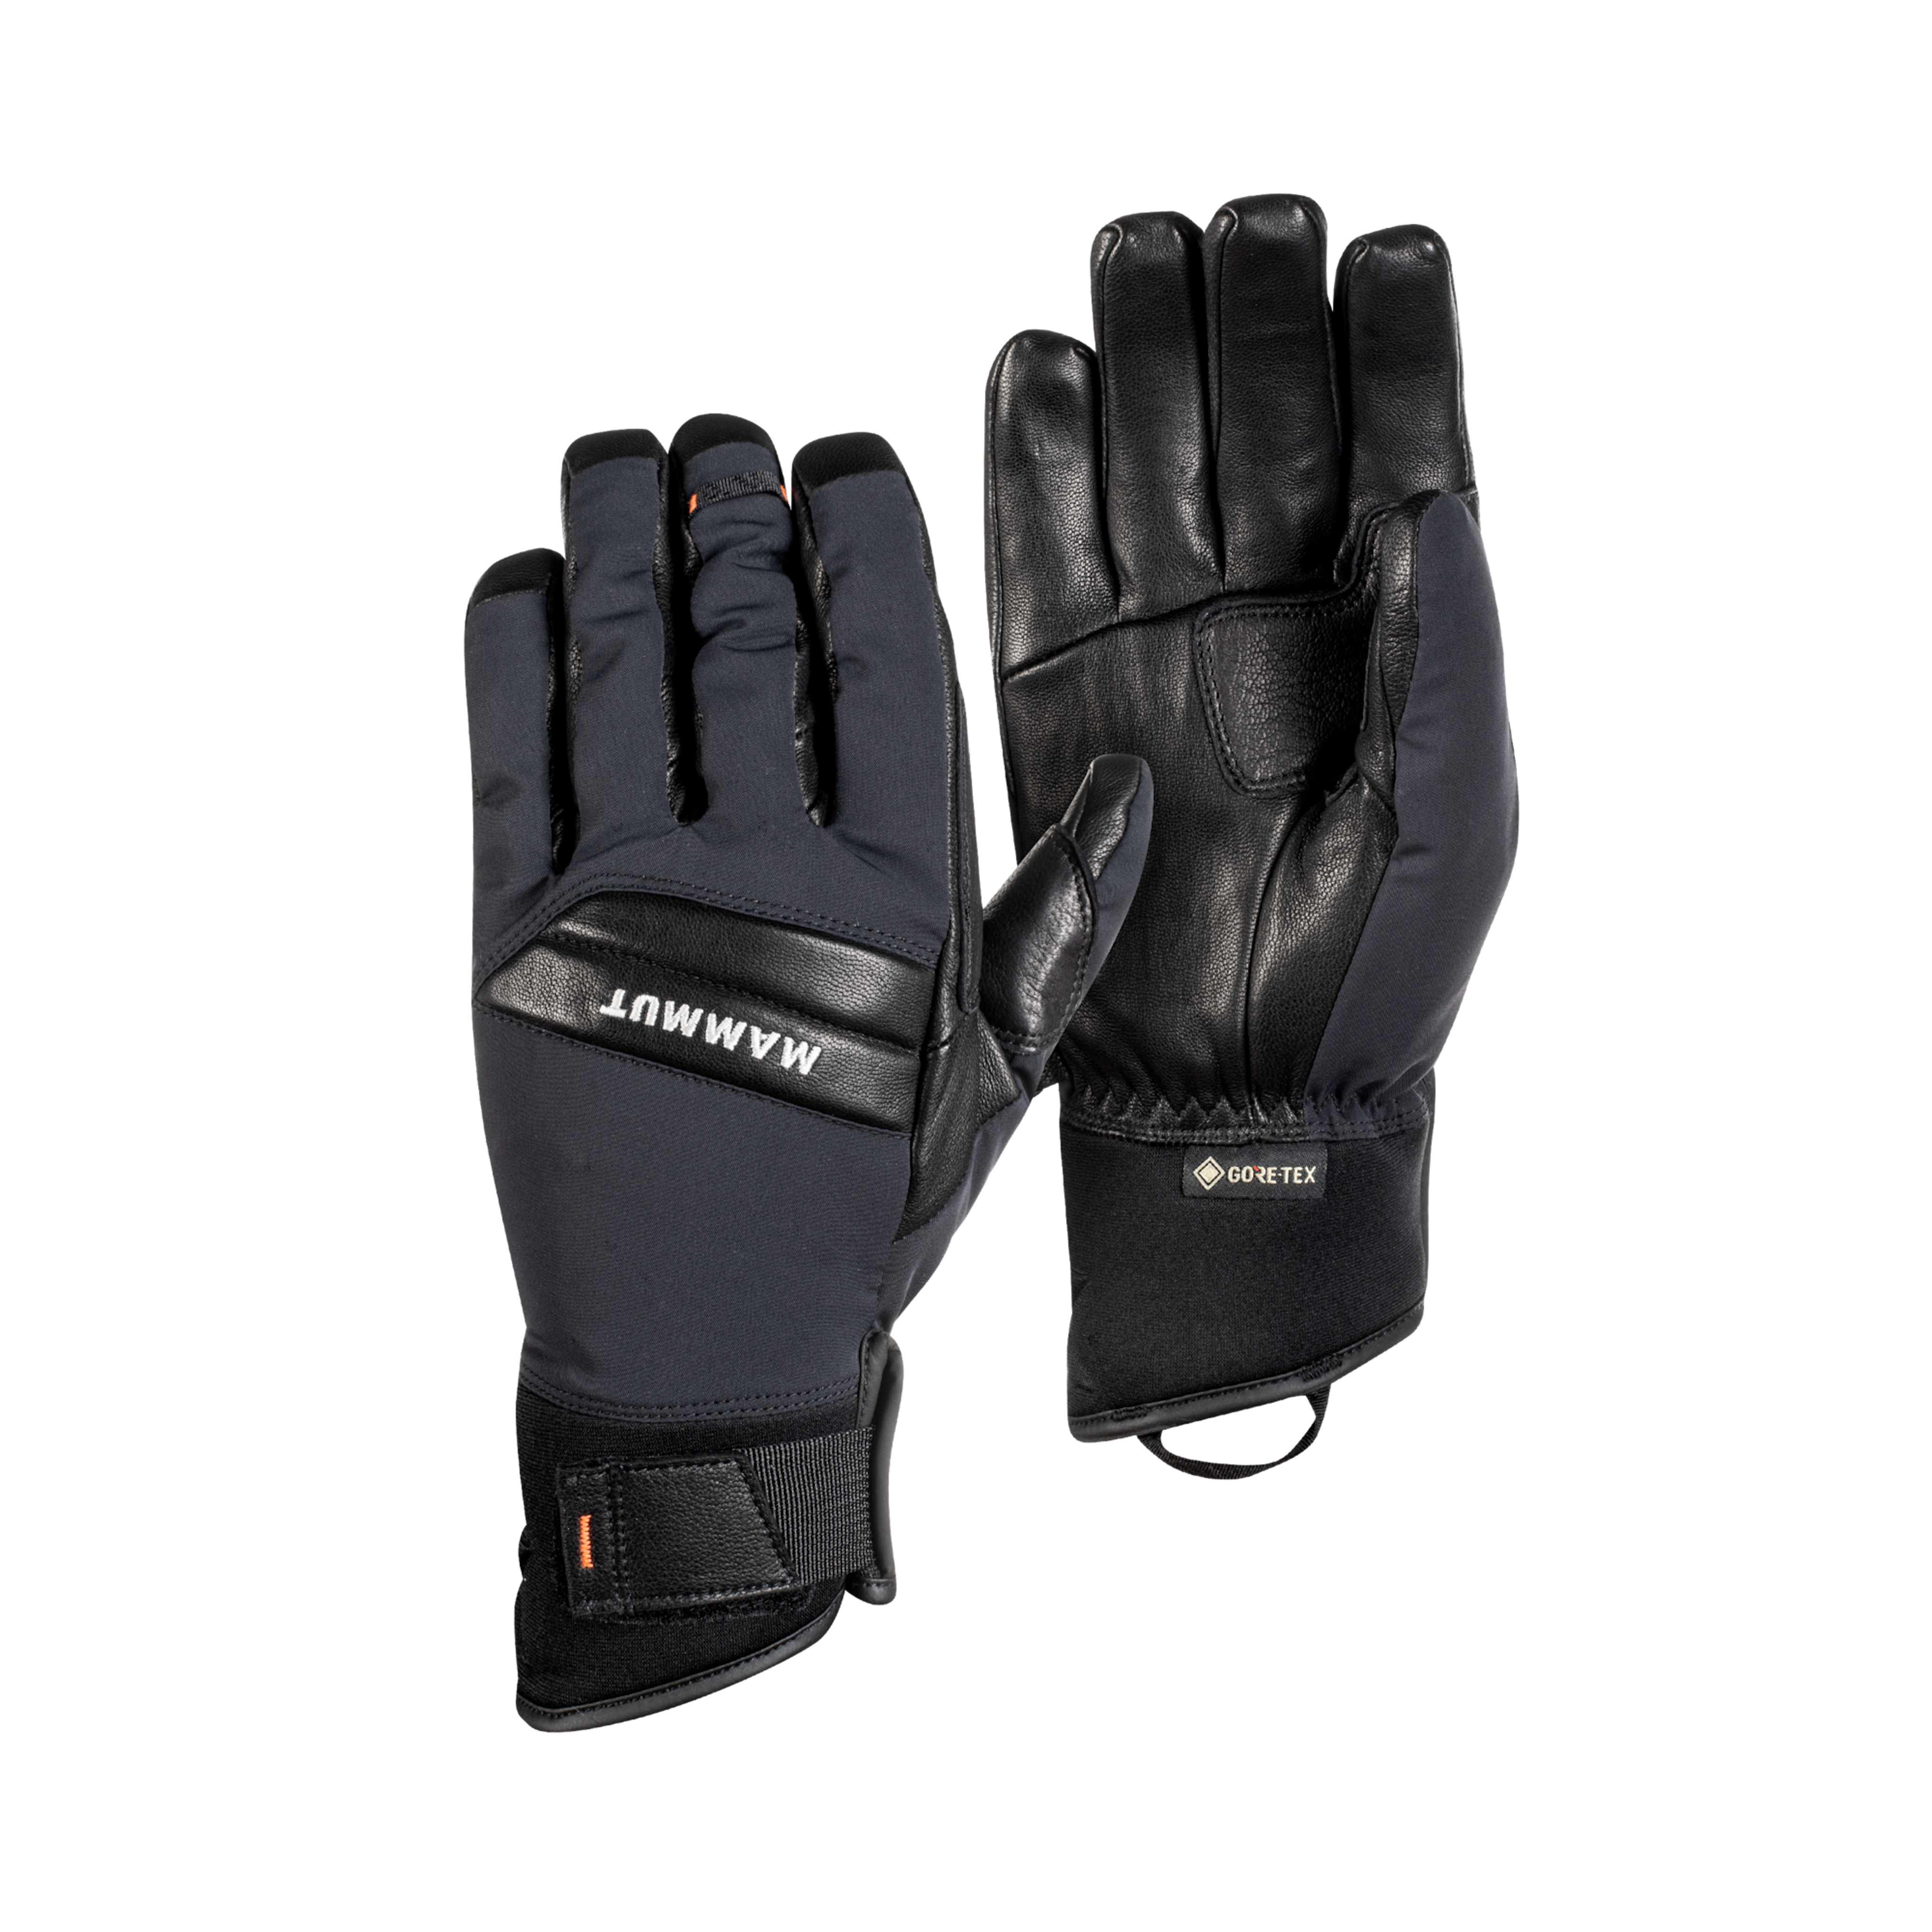 Mammut winter gloves in black